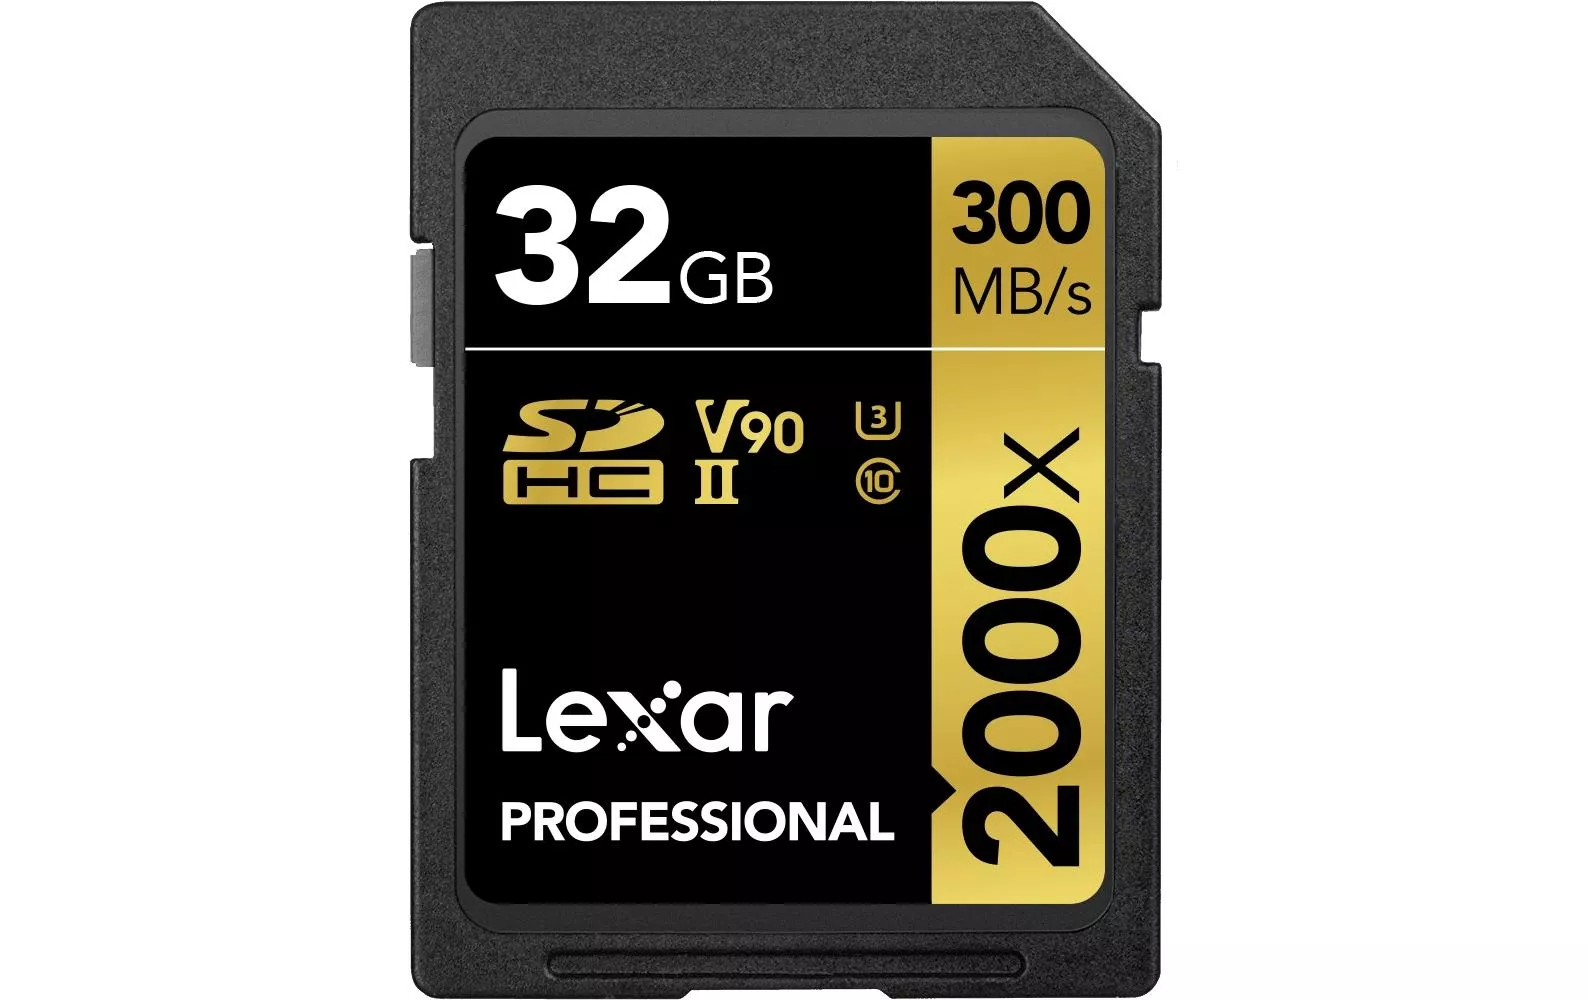 Carte SDHC Professional 2000x GOLD Series 32 GB